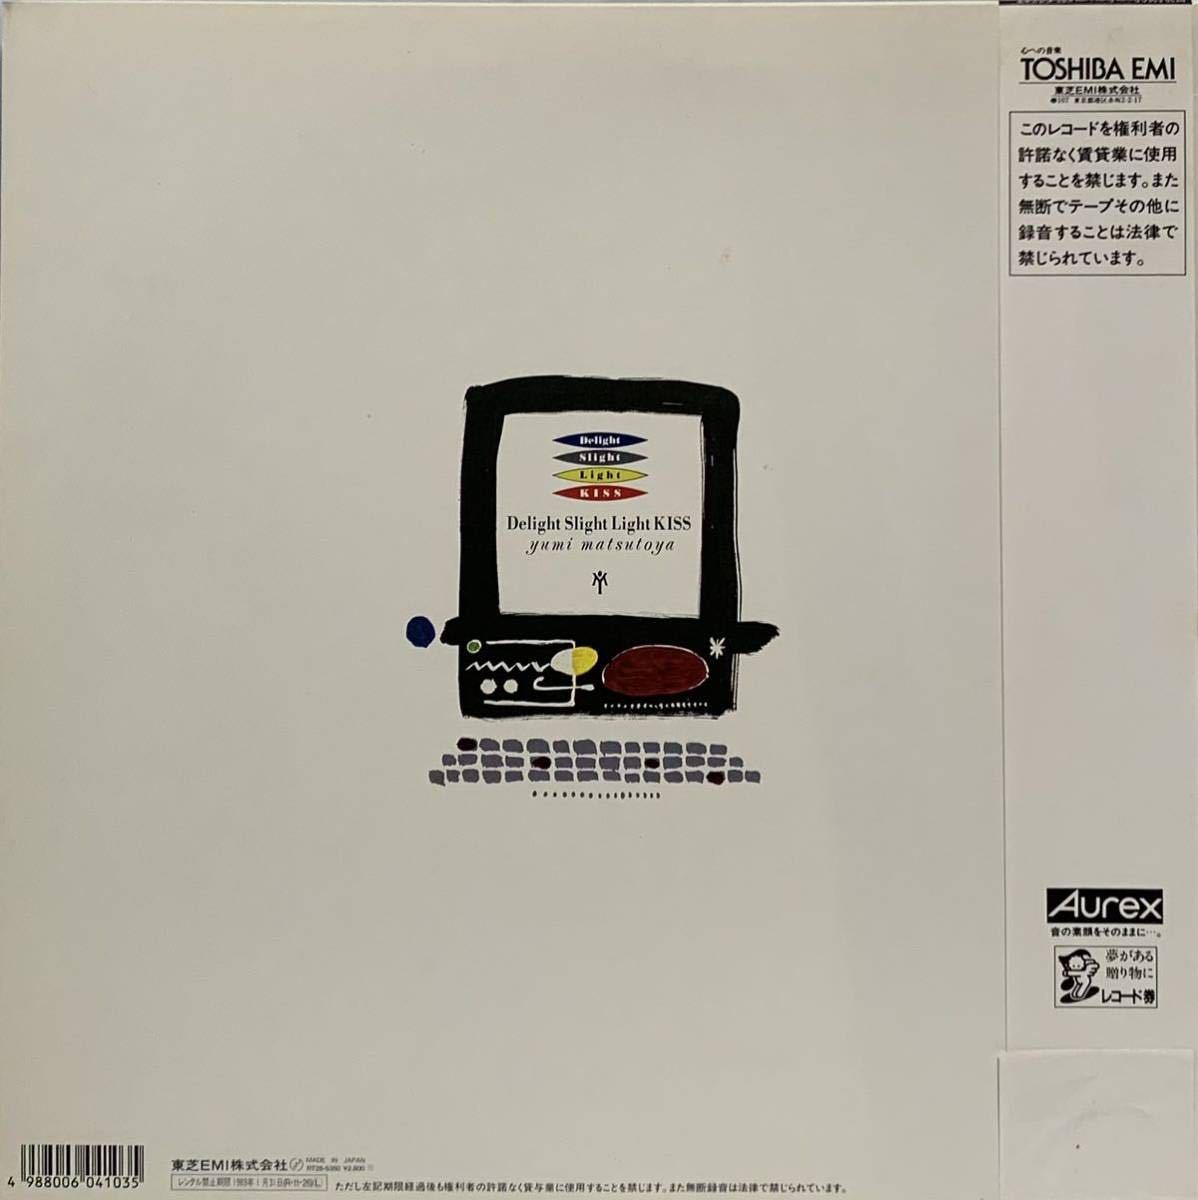 ［LP］帯付・美盤 松任谷由実 / Delight Slight Light Kiss（1988）Japanese city pop 和モノ CD移行期 リフレインが叫んでる RT28-5350_画像2